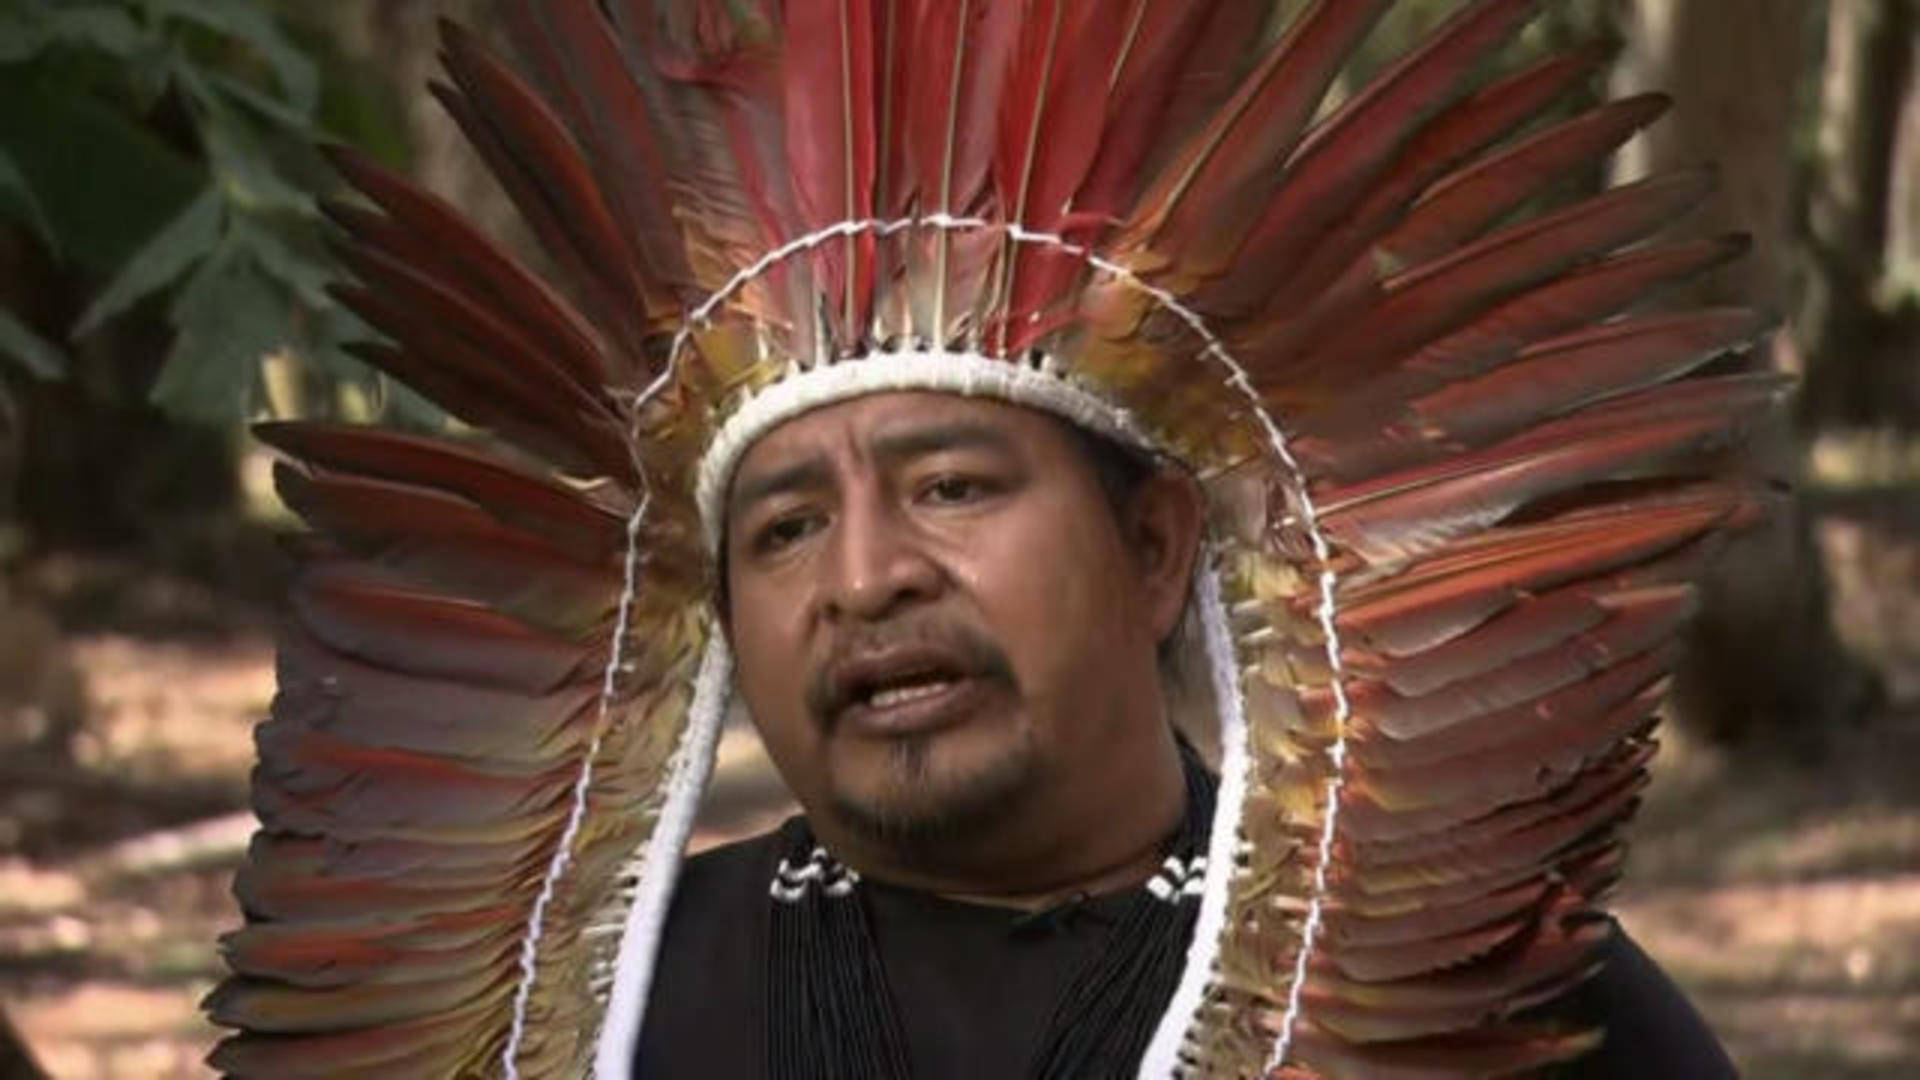 Amazonas Tribal Leader